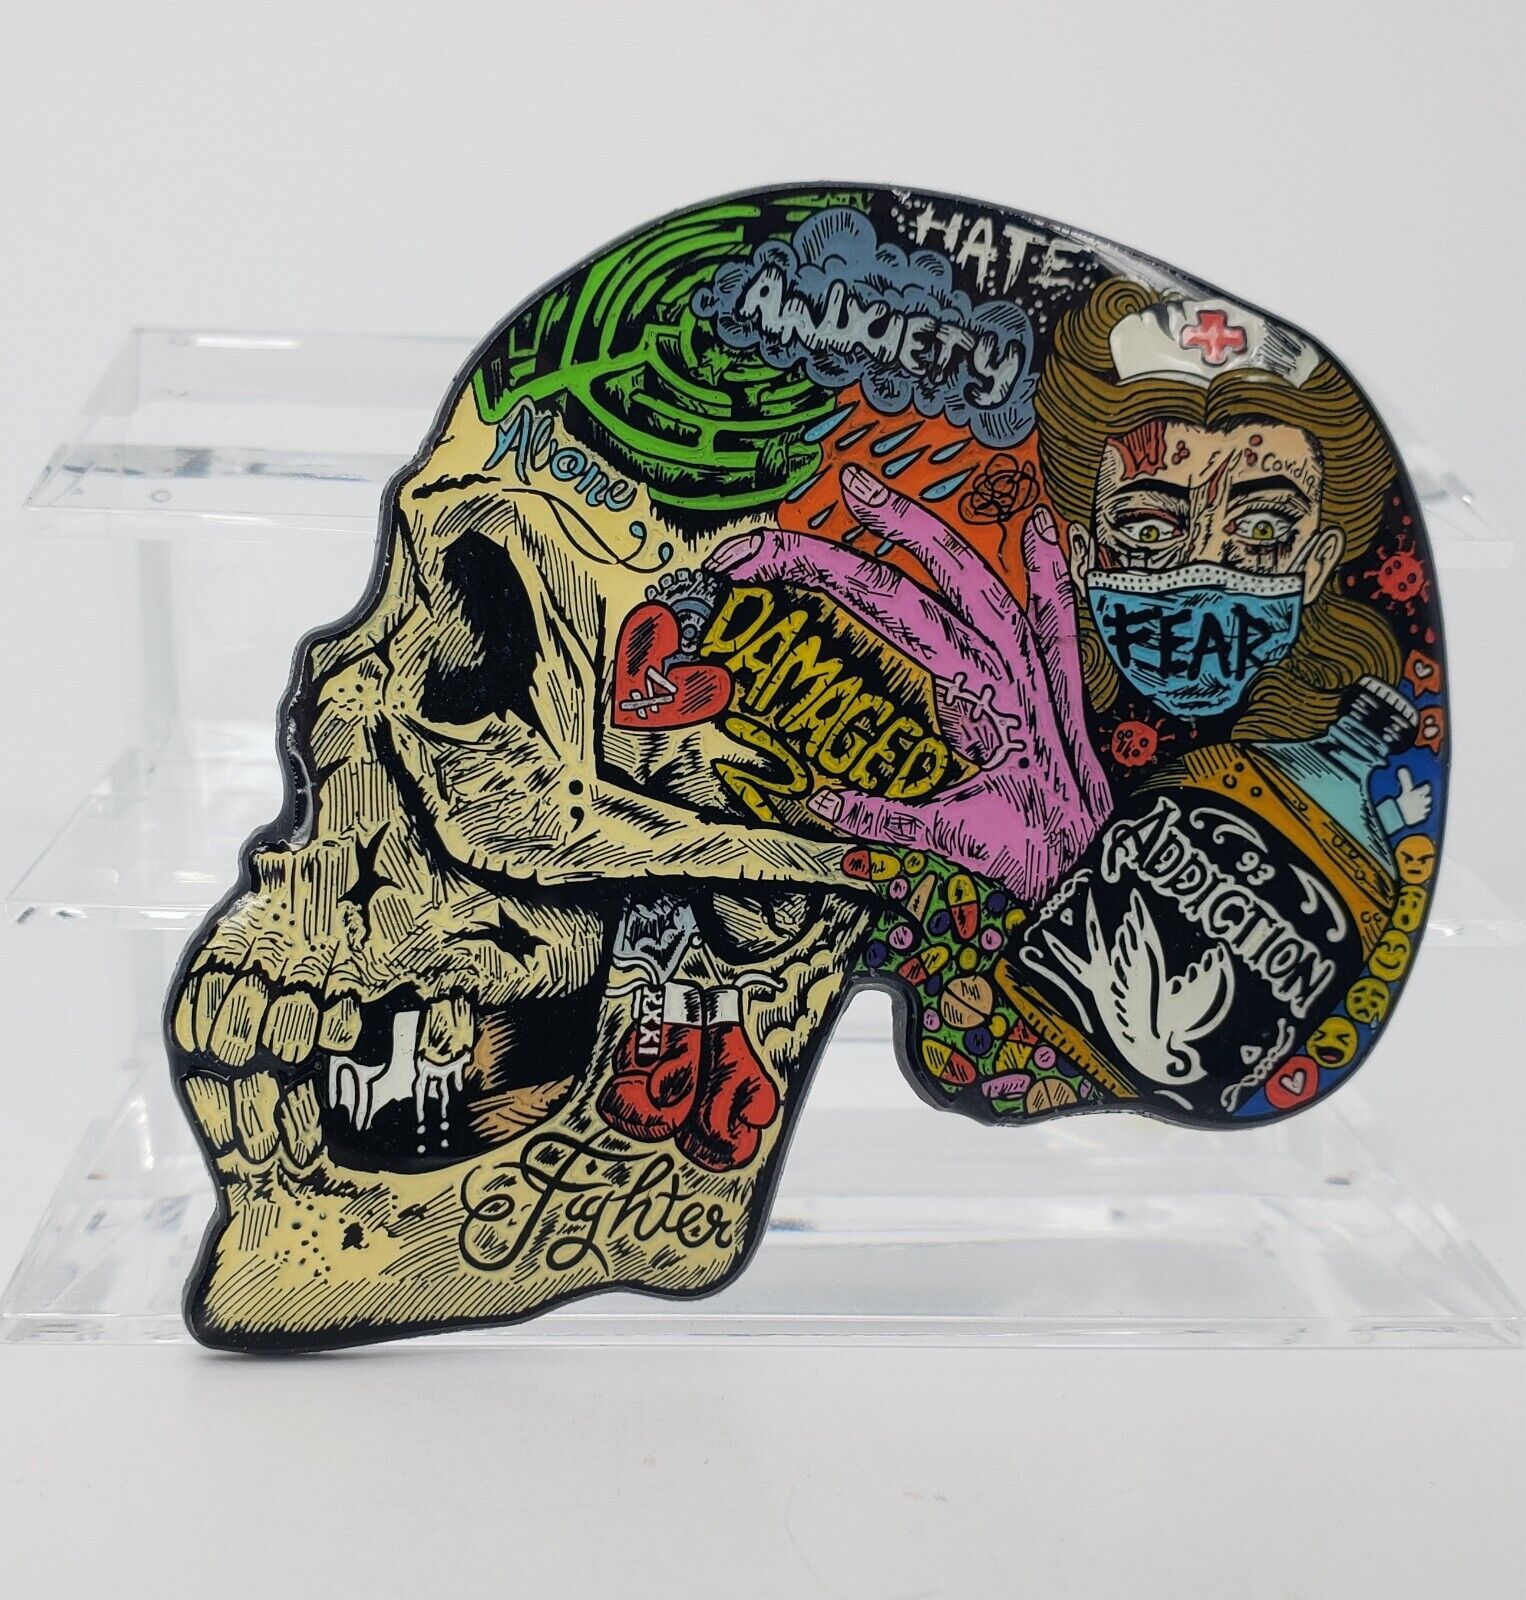 Little Sams Art Mental Health Skull Limited Edition Pin Very Rare Nice Glow